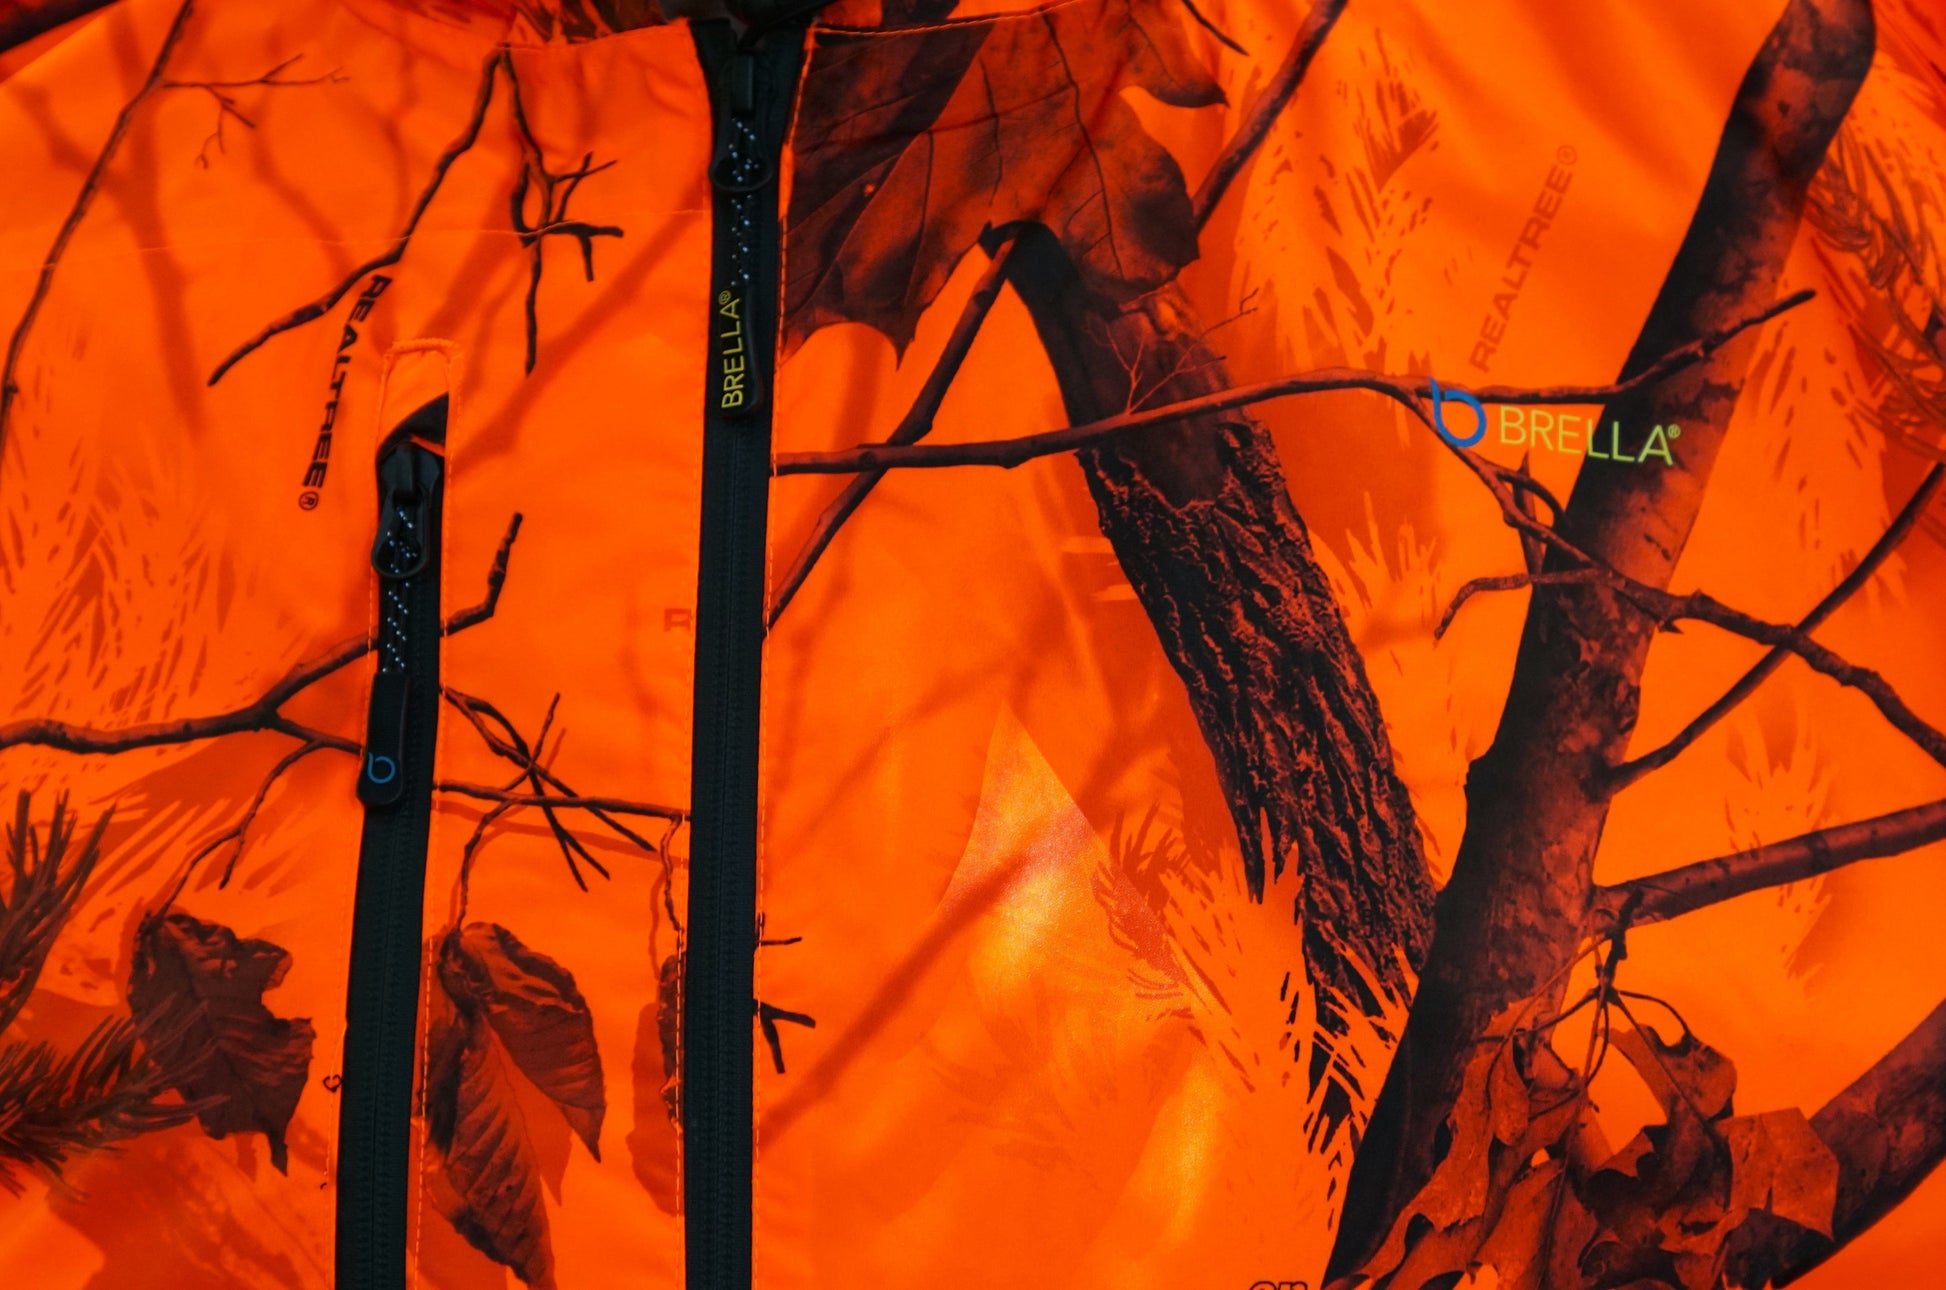 orange realtree camo backgrounds